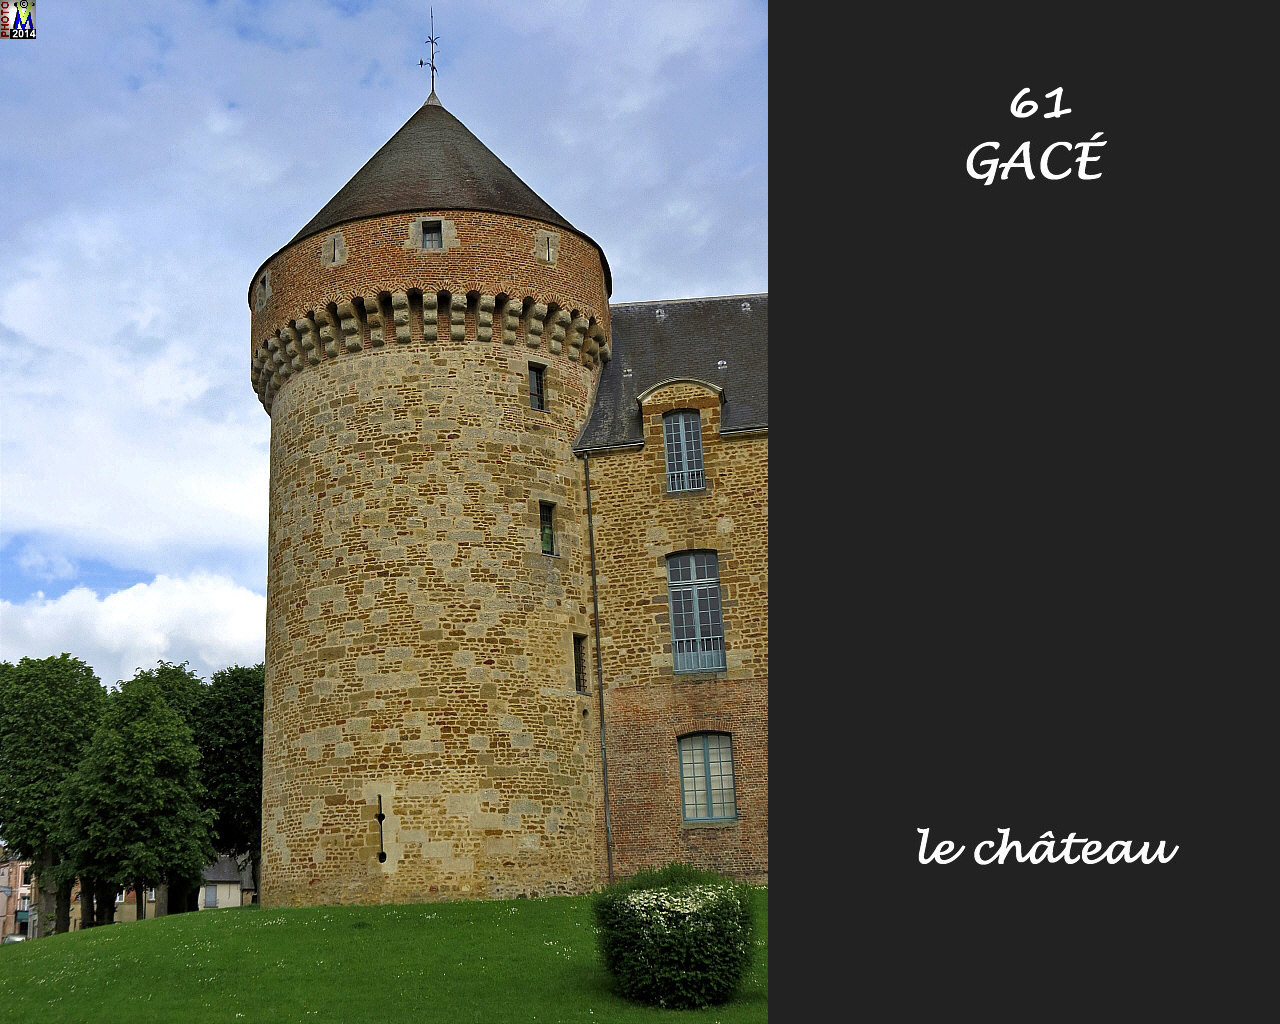 61GACE_chateau_116.jpg